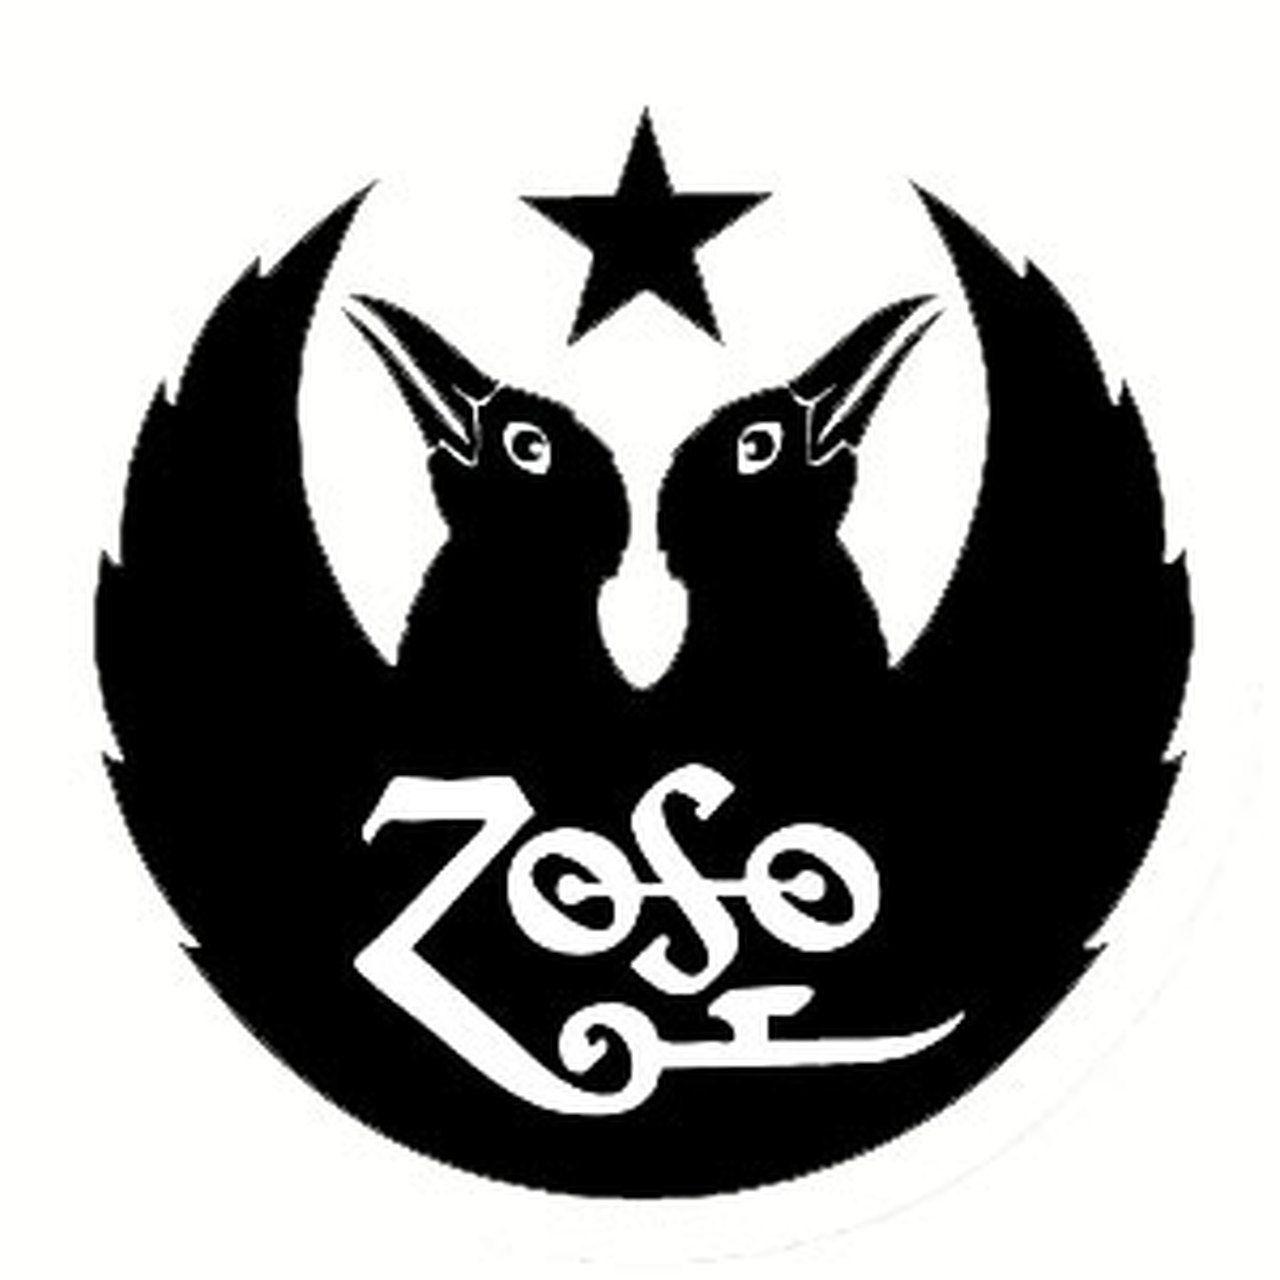 Zoso Logo - The Black Crowes Zoso Band Logo Vinyl Decal Sticker